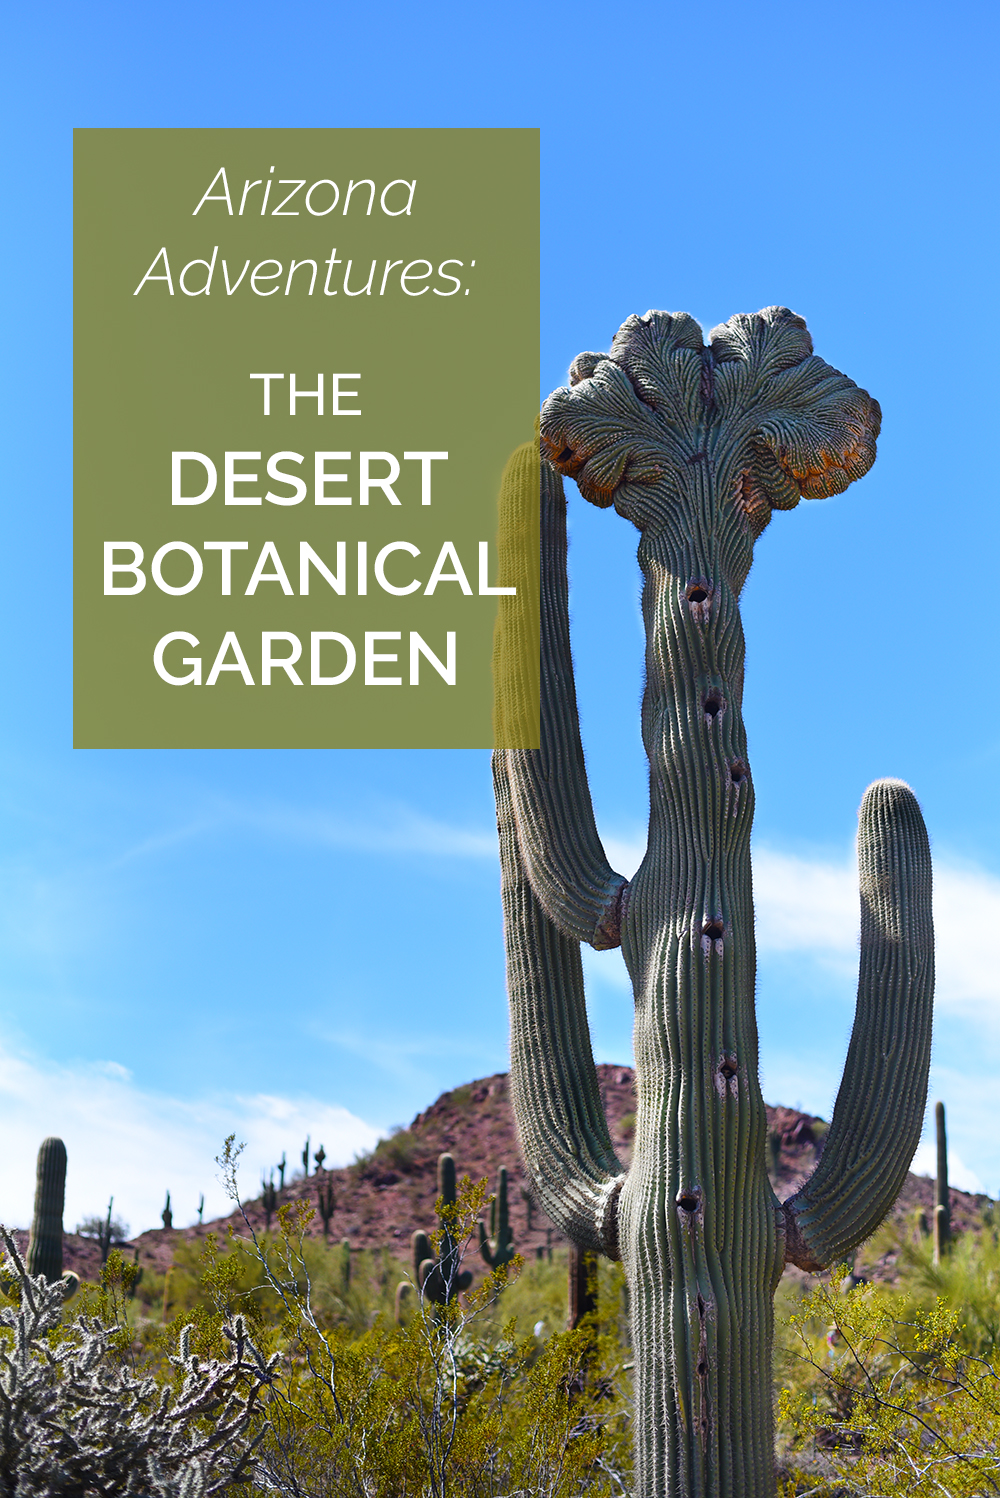 Arizona Adventures: The Desert Botanical Garden